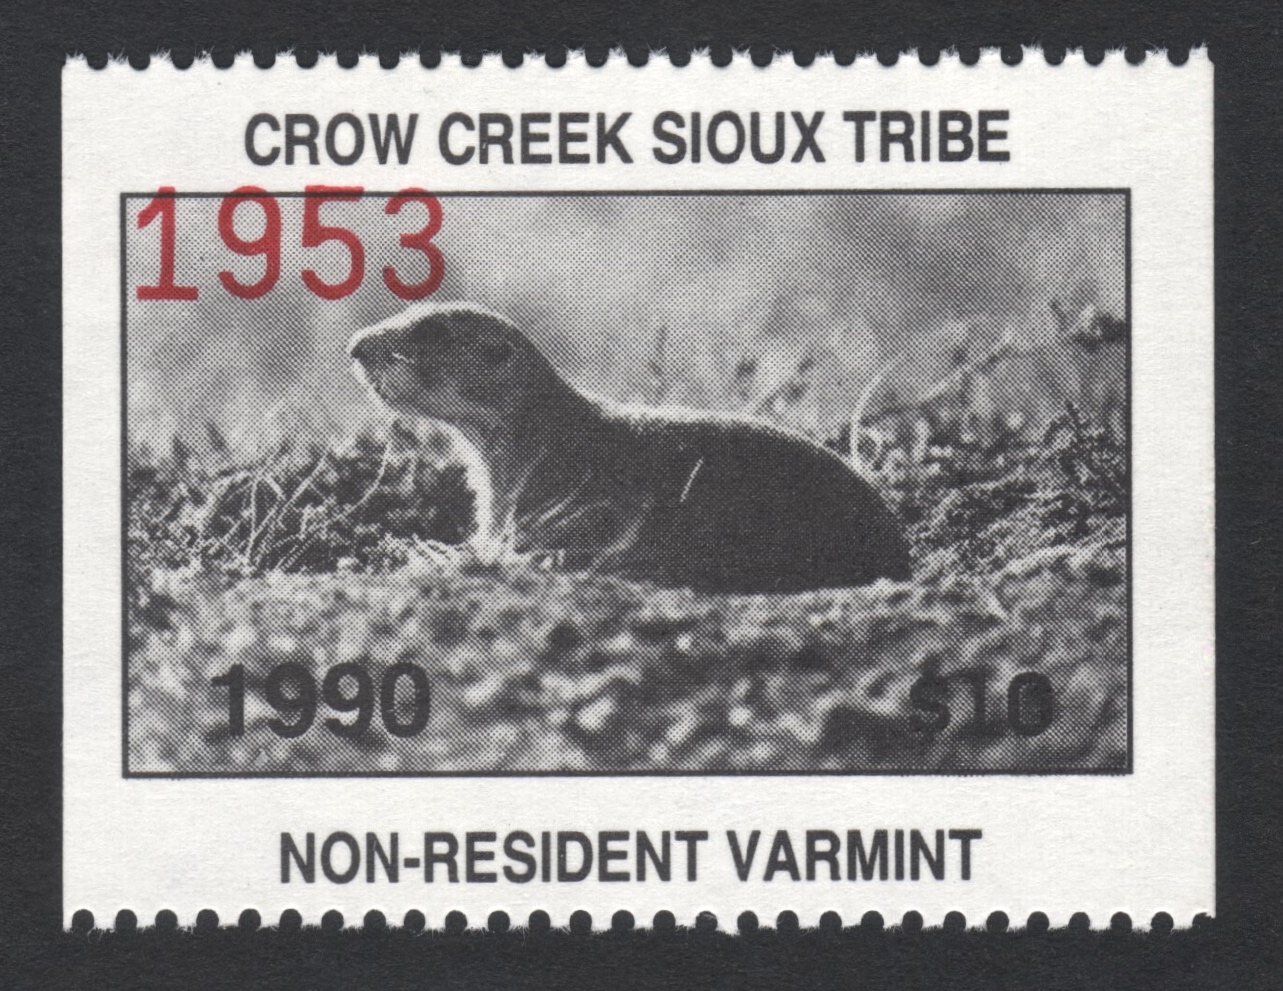 1990 Crow Creek NR Varmint